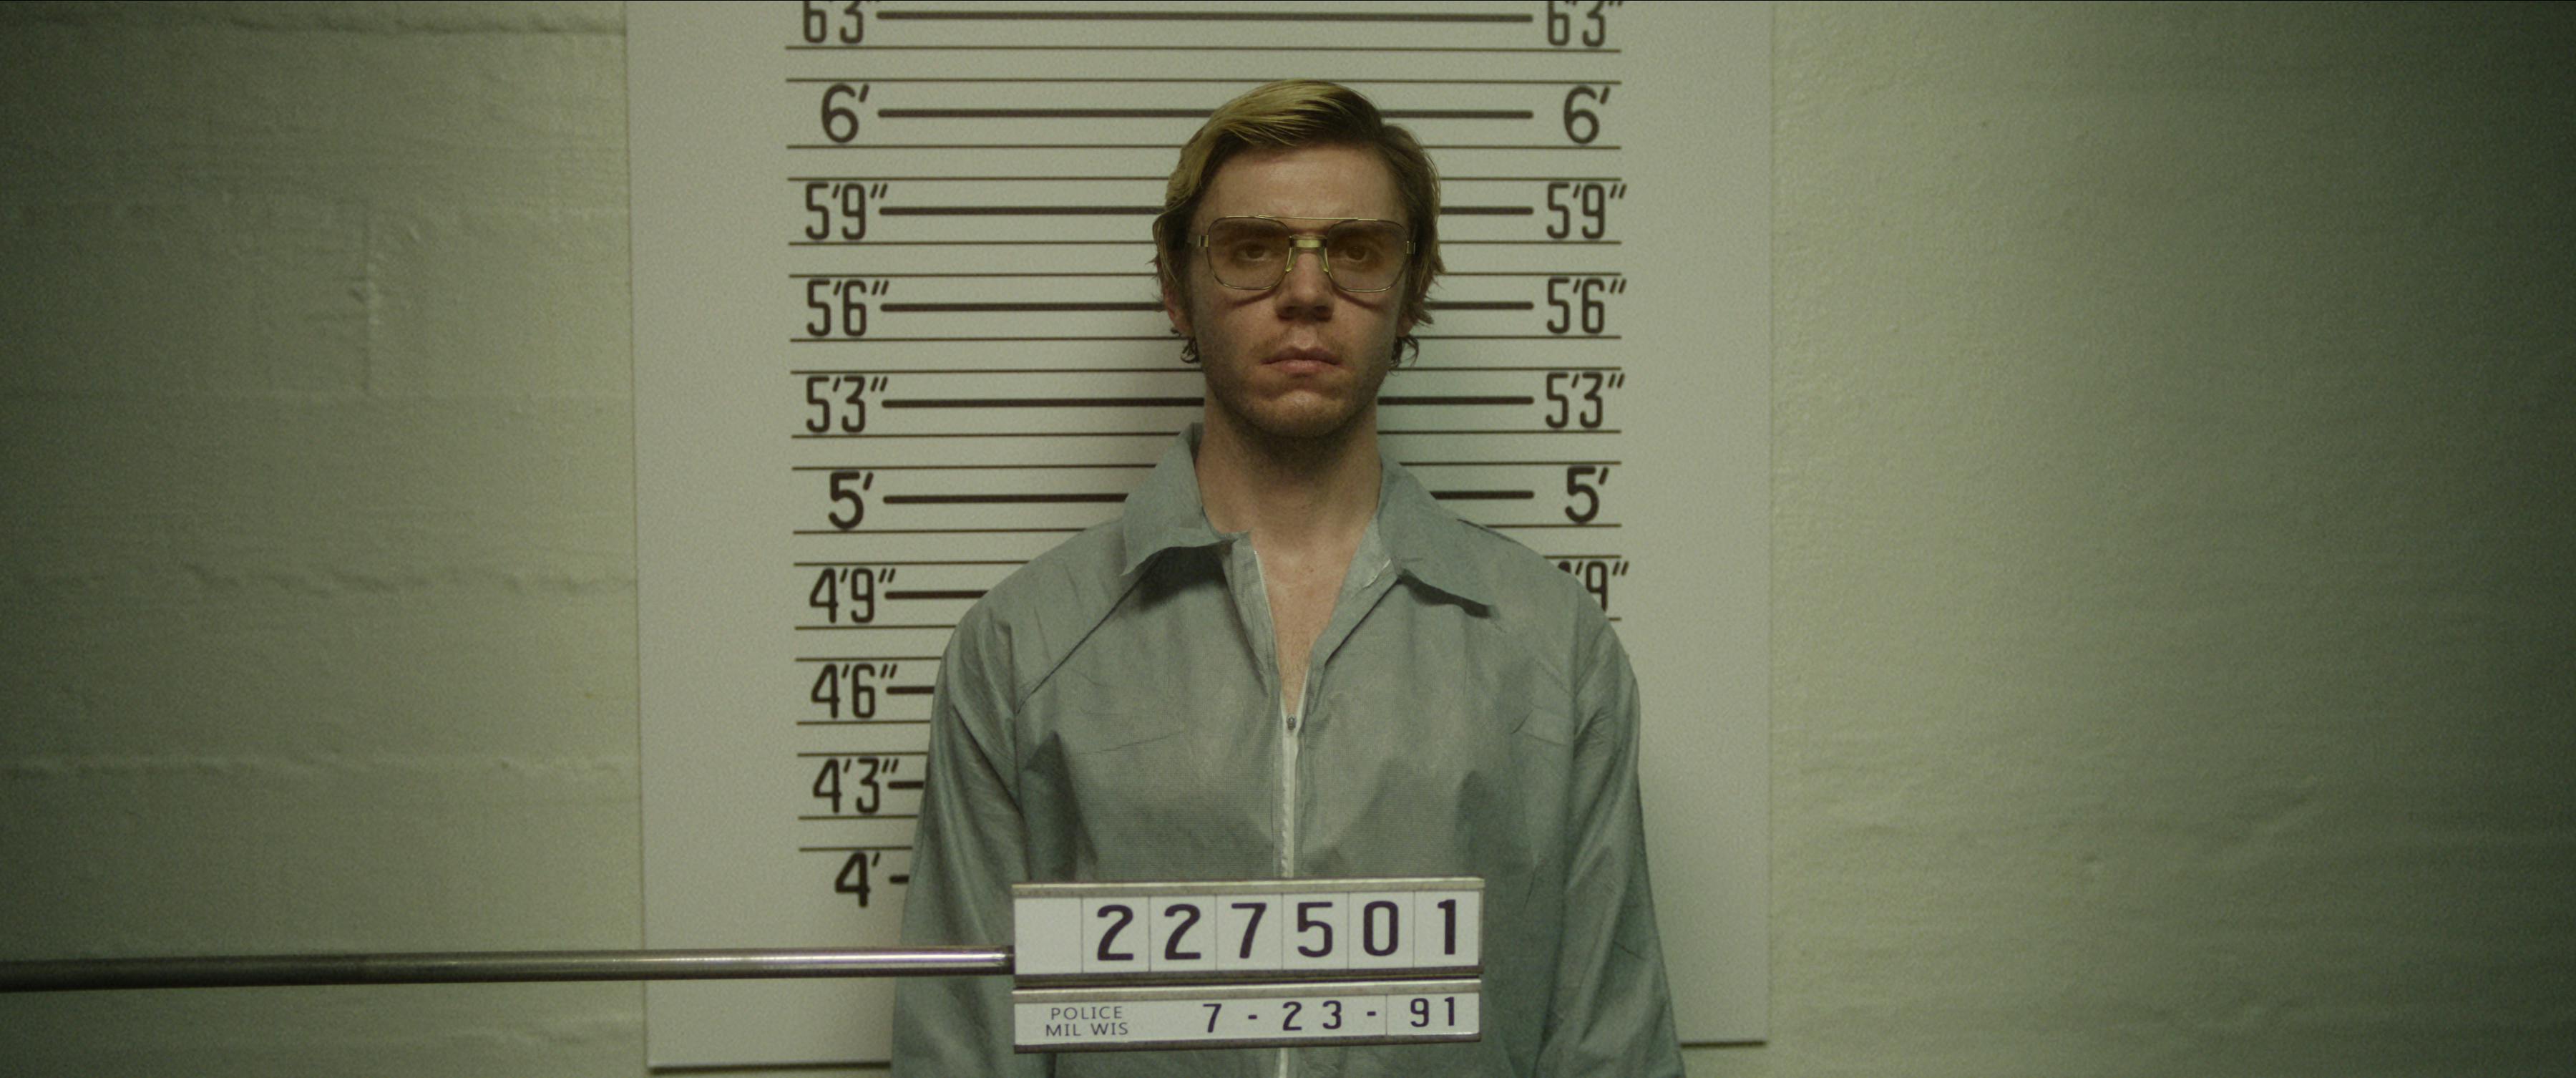 I den nye Netflix-serie "Dahmer" spiller Evan Peters rollen som Jeffrey Dahmer.
